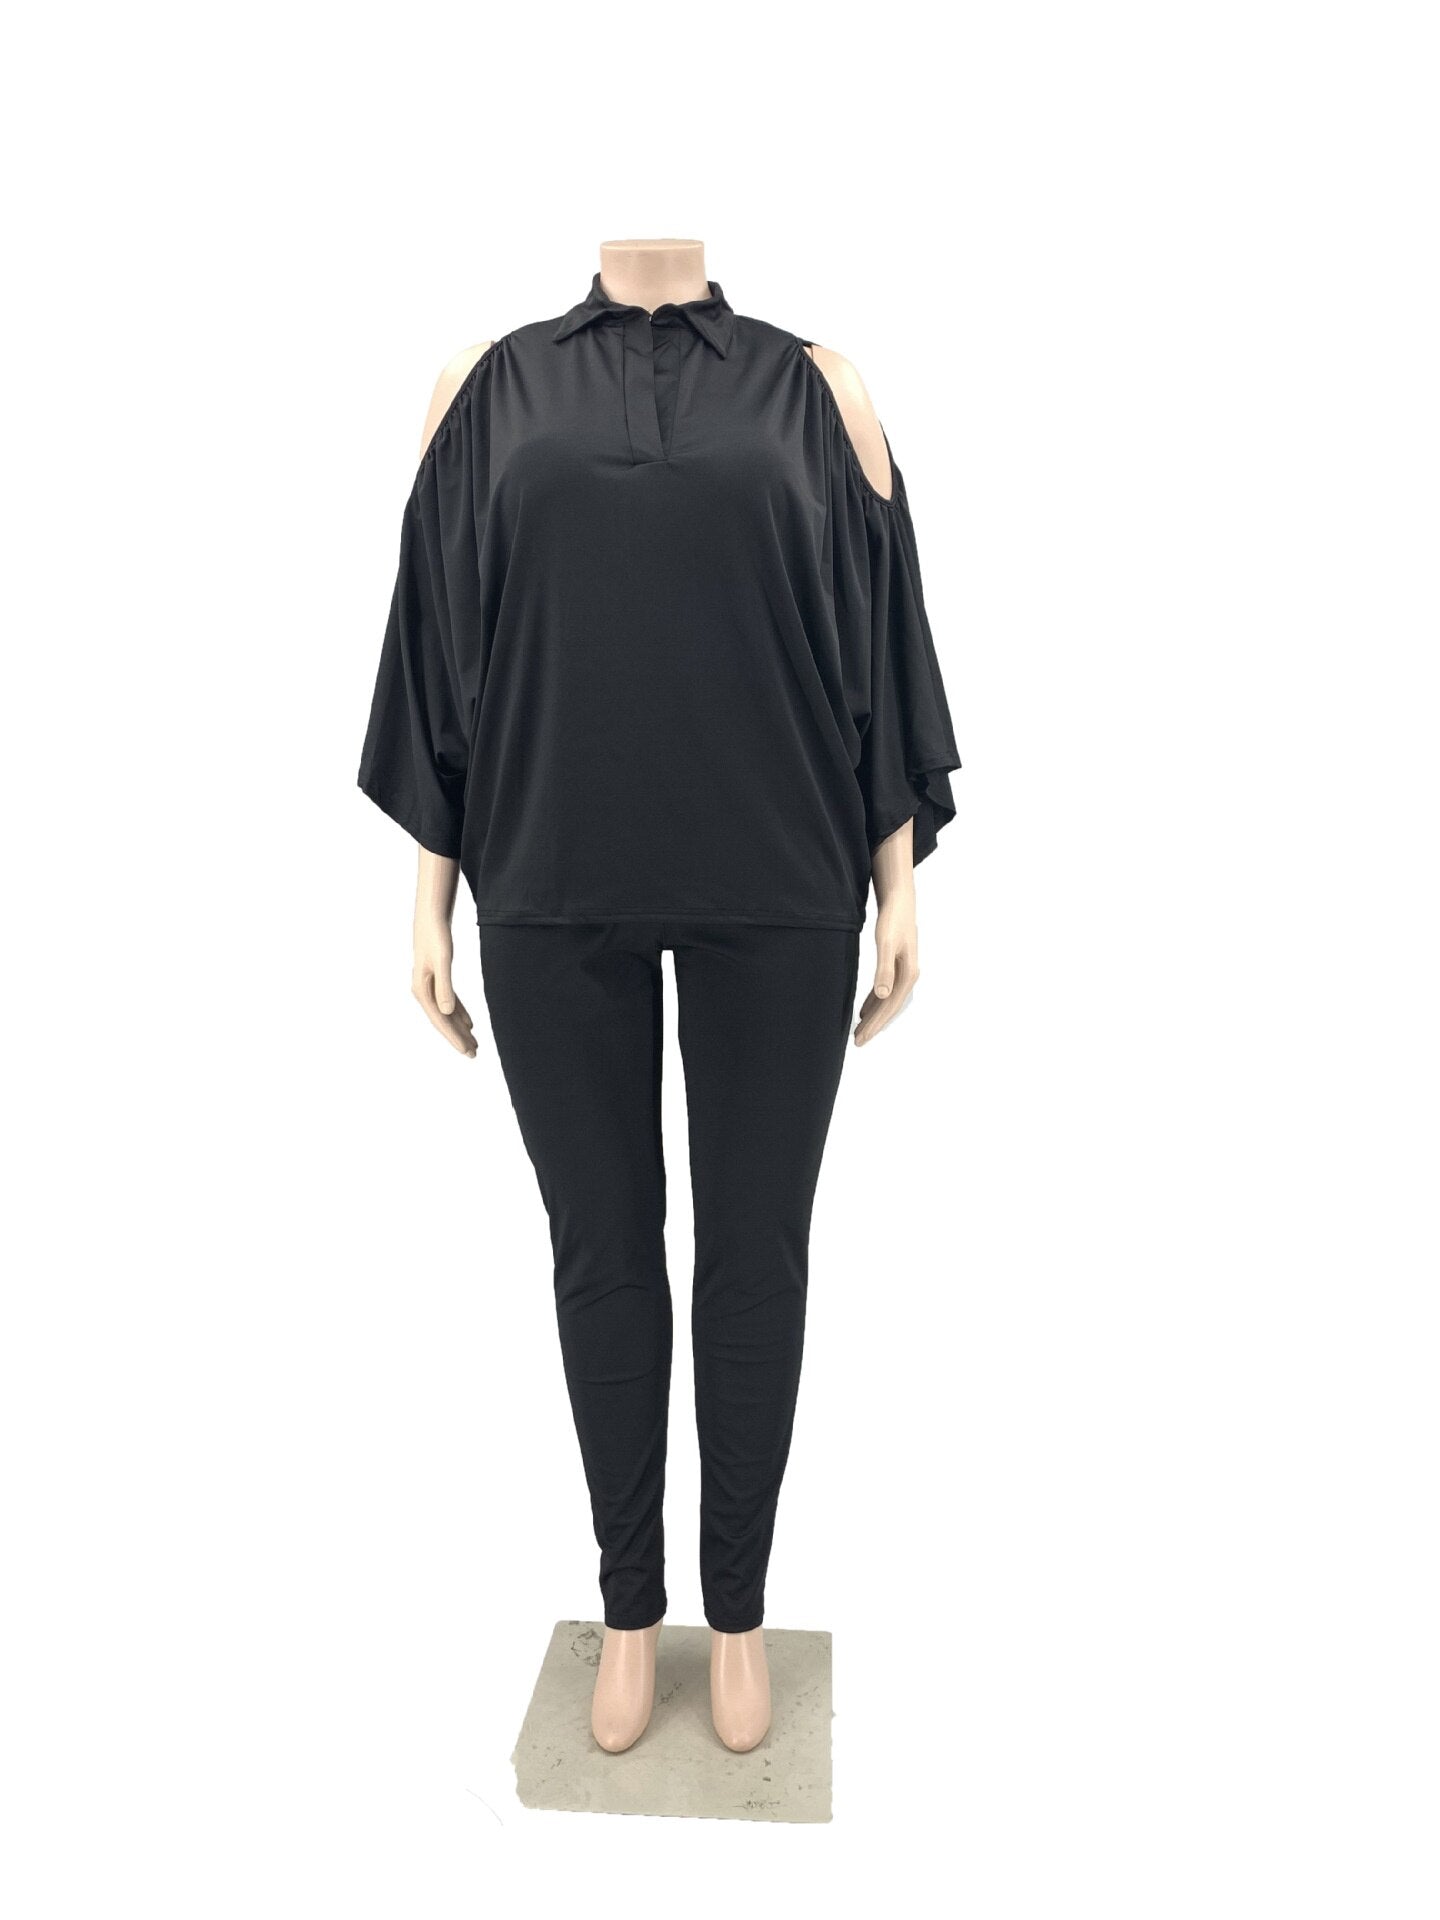 Women's Hollow Out Off Shoulders Fashion Designer Palazzo Jumpsuits (Plus Size)